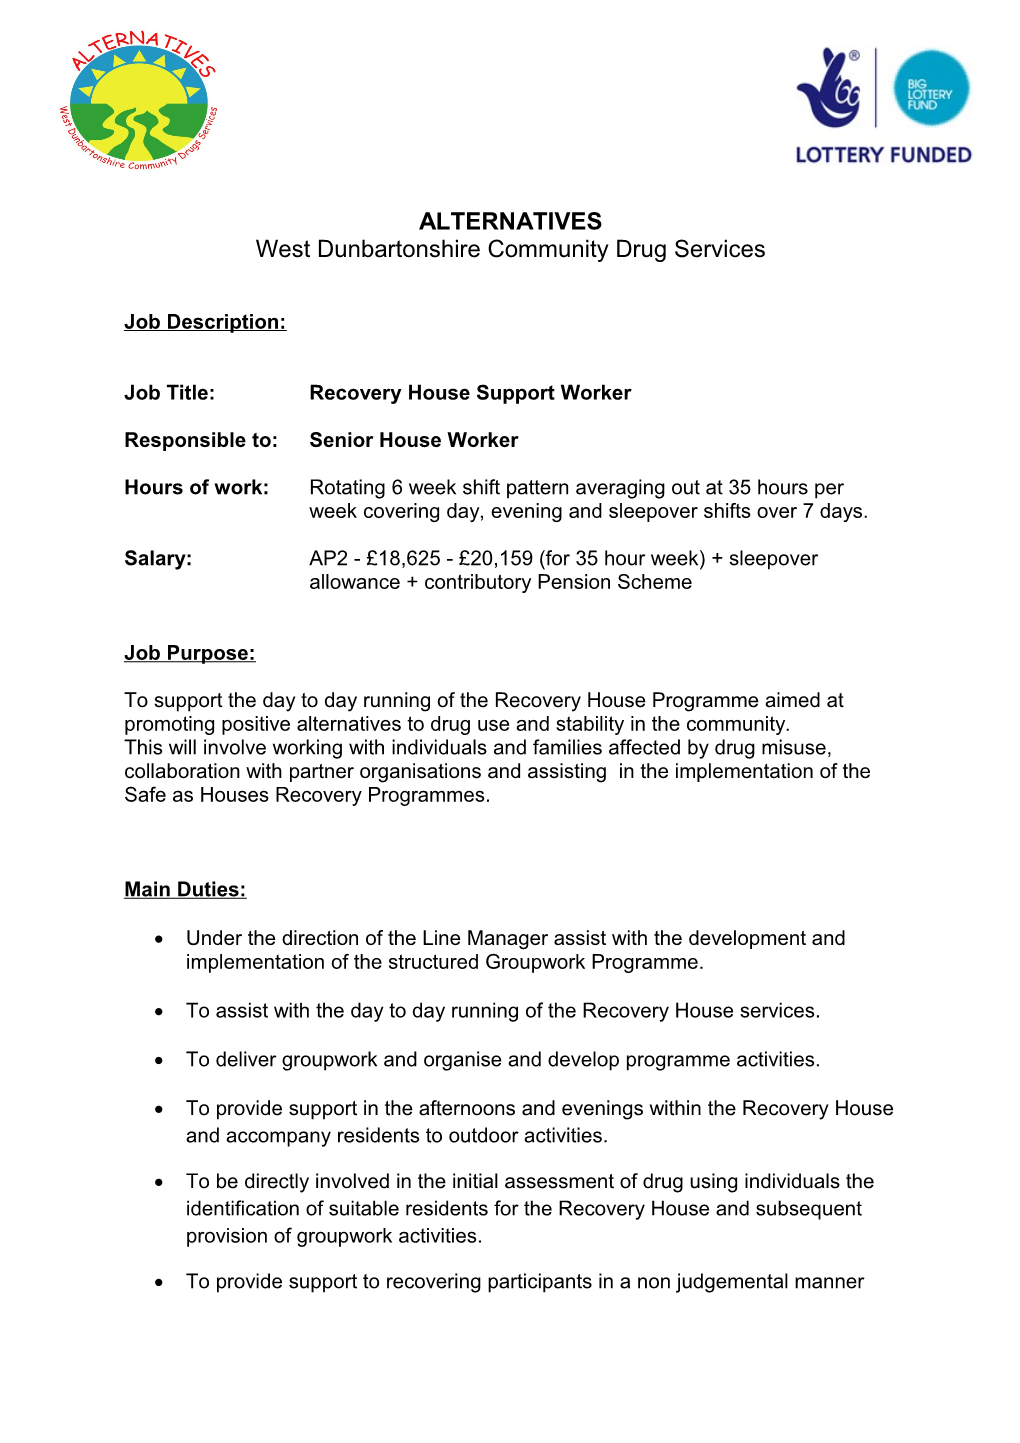 West Dunbartonshire Community Drug Services